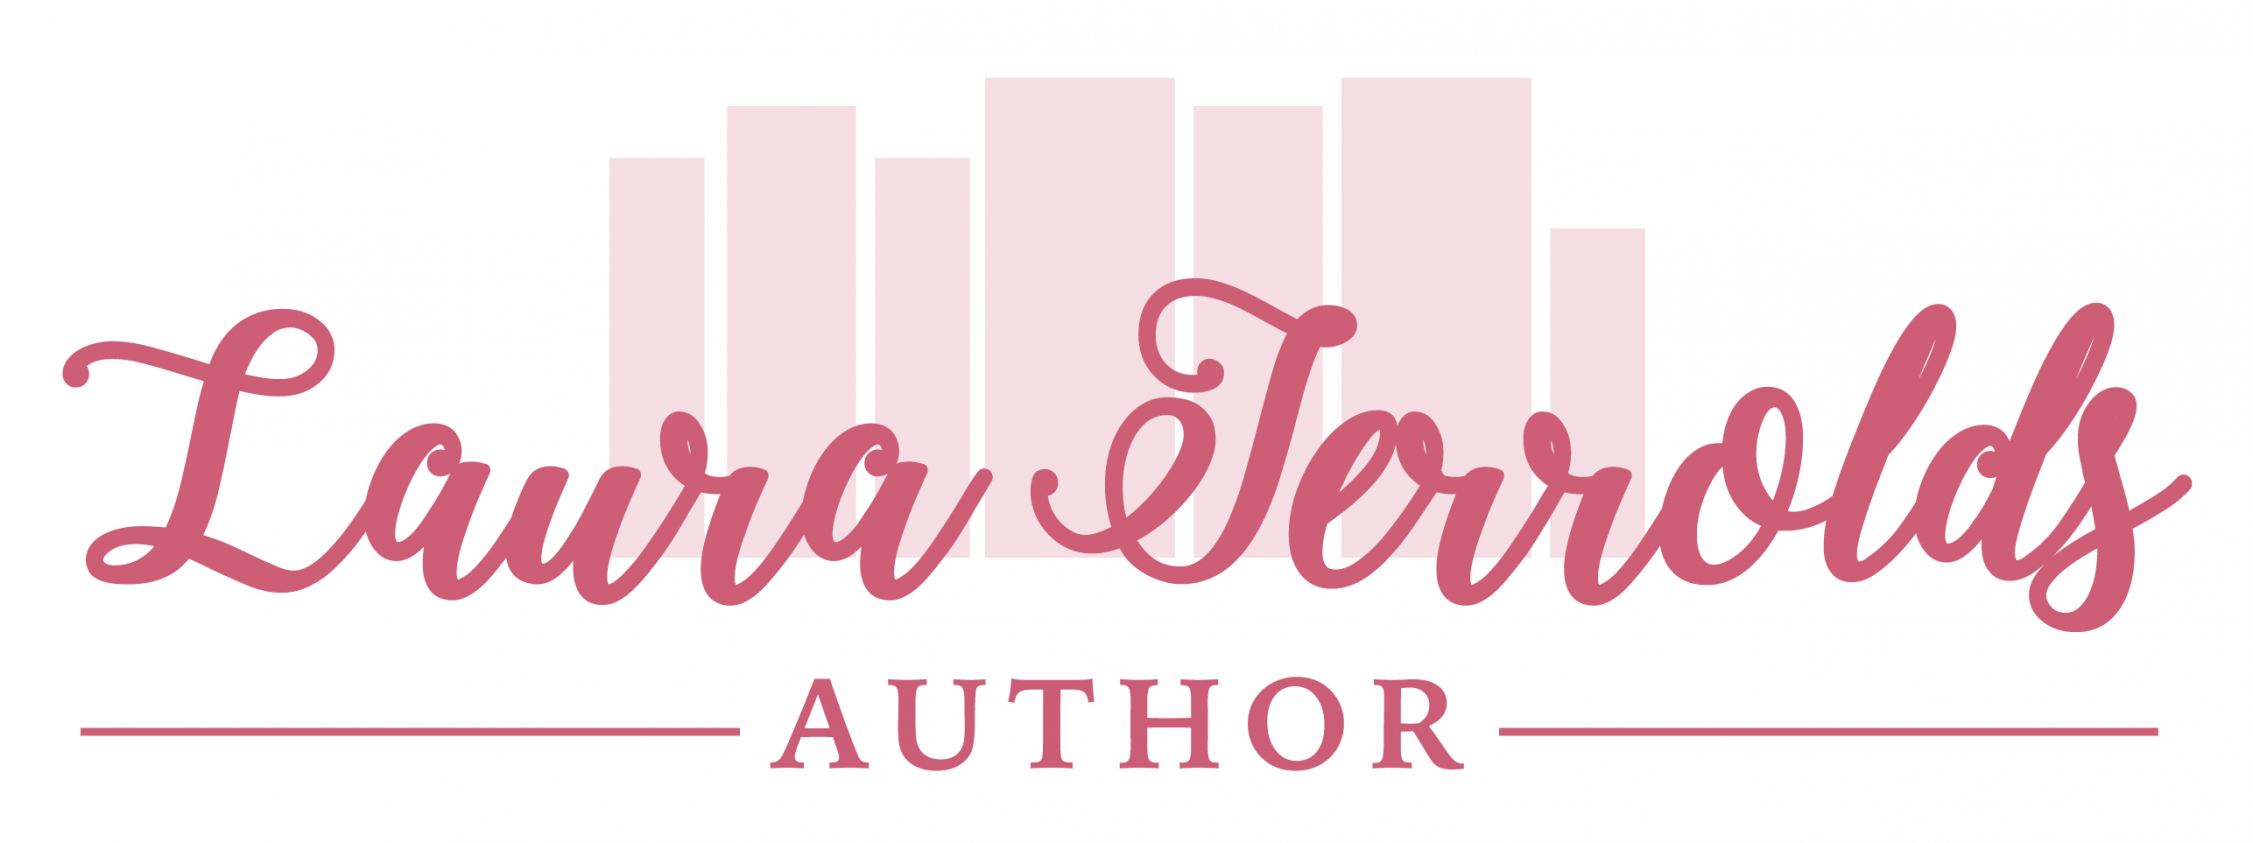 Laura Jerrolds - Author Logo